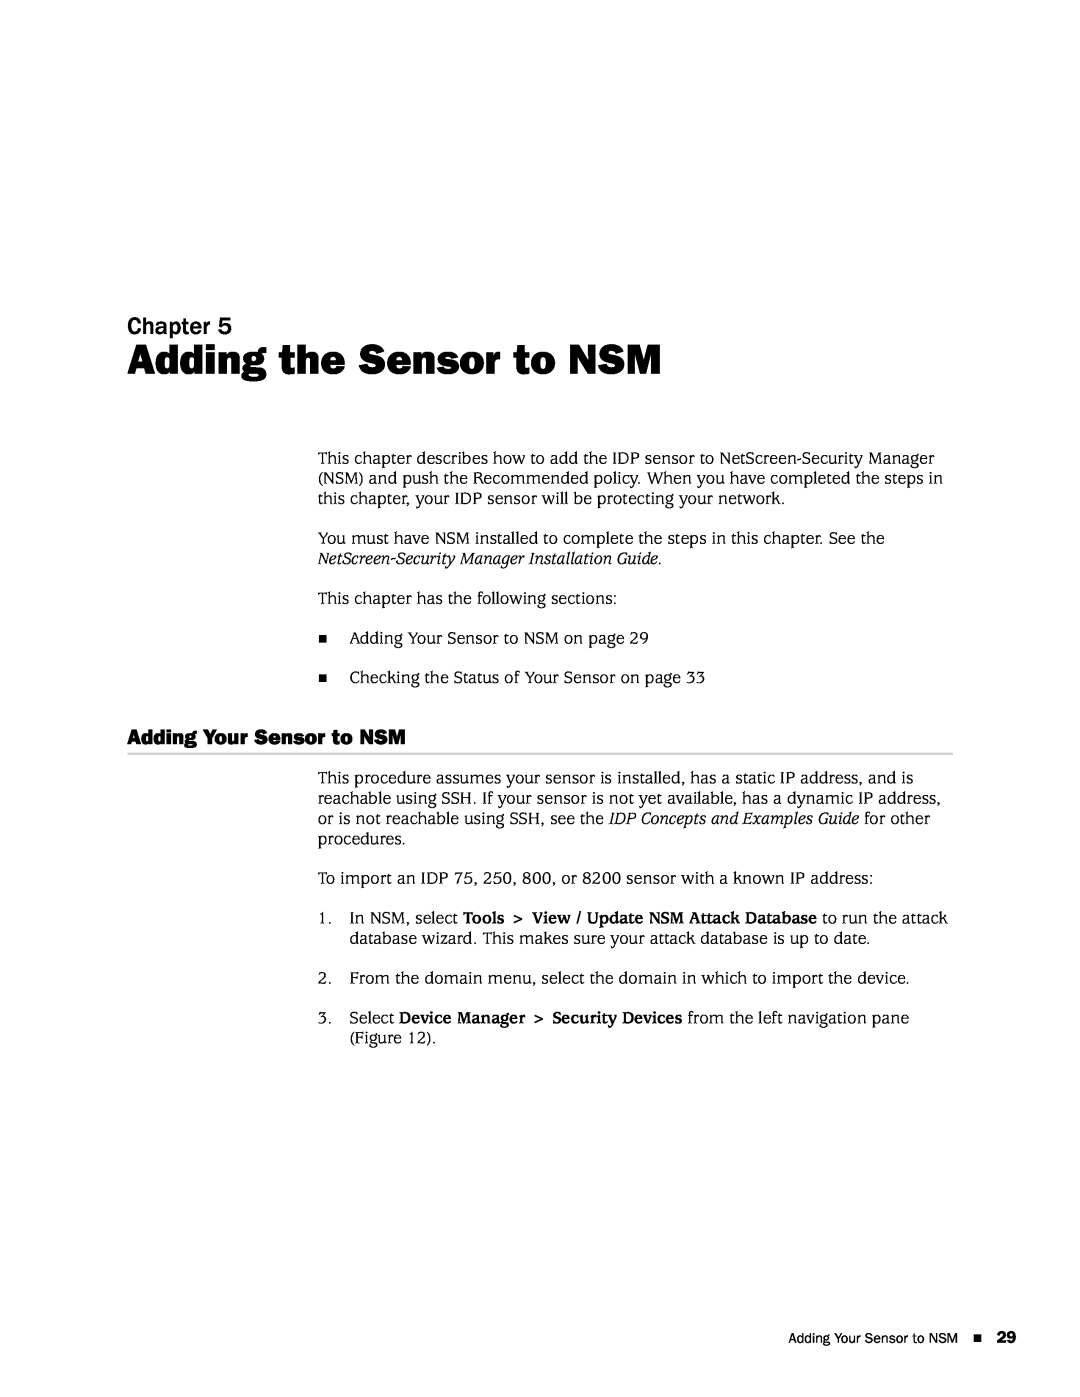 Juniper Networks IDP75 Adding the Sensor to NSM, Adding Your Sensor to NSM, NetScreen-SecurityManager Installation Guide 